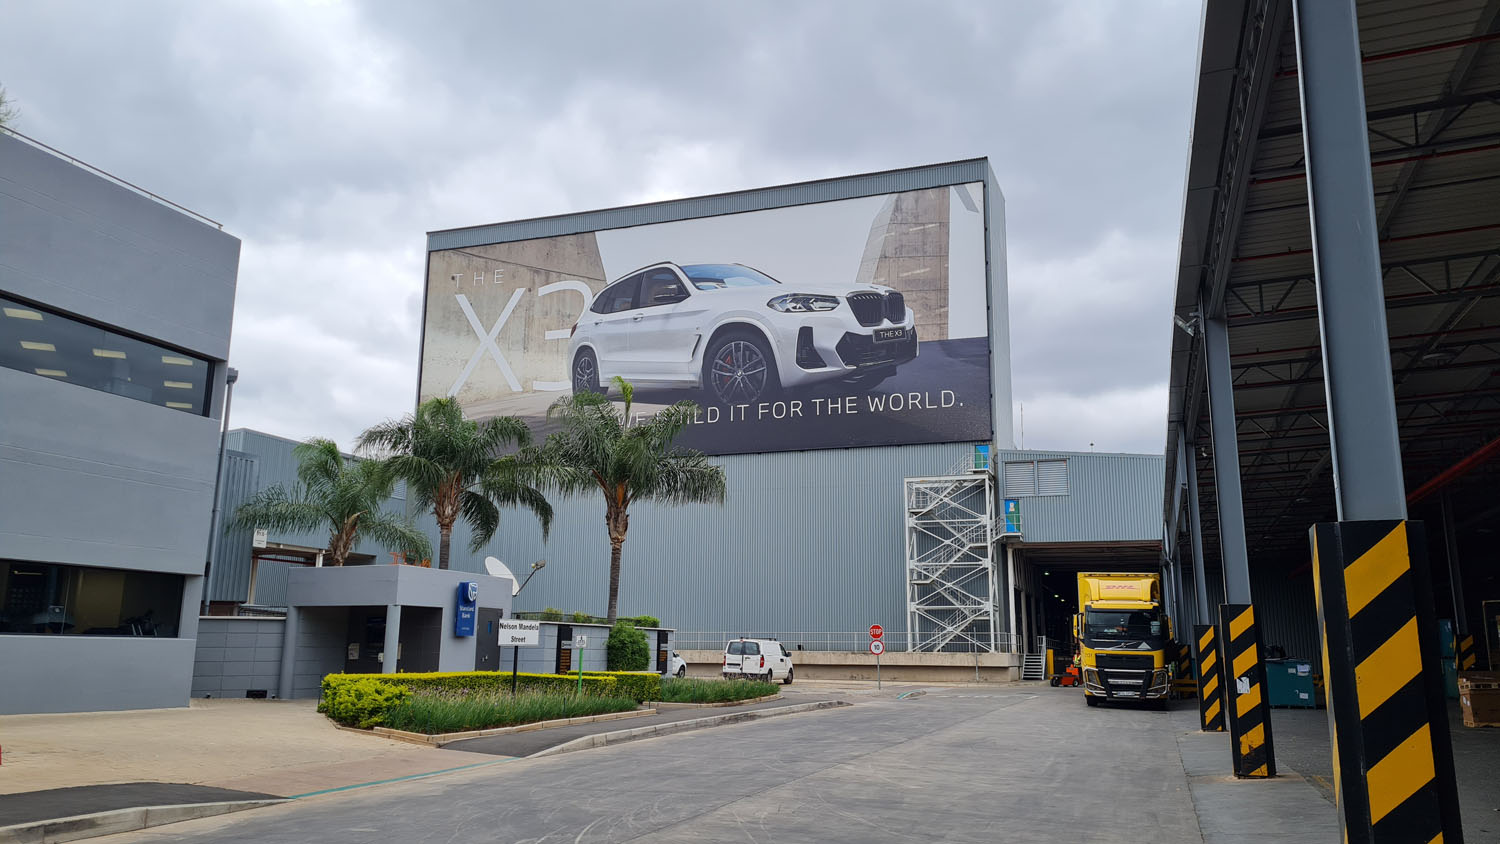 bmw 3 series, bmw x3, inside bmw’s r12.6 billion factory in south africa – photos